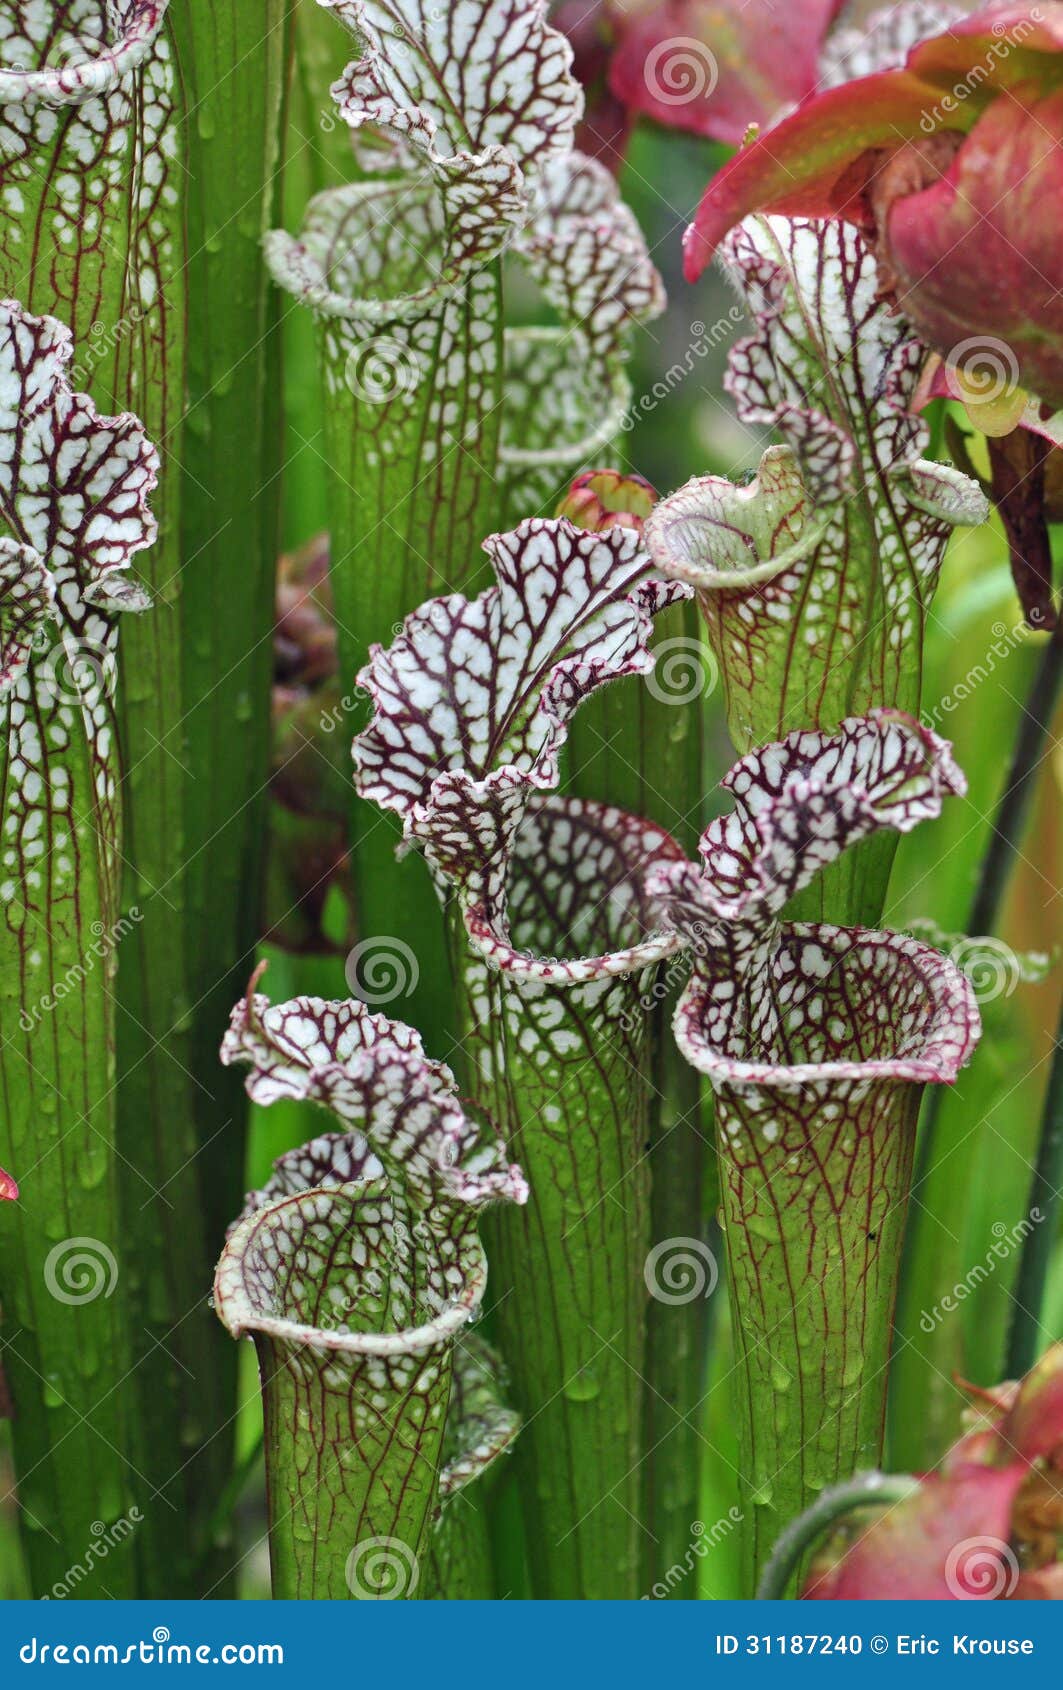 carnivorous plants